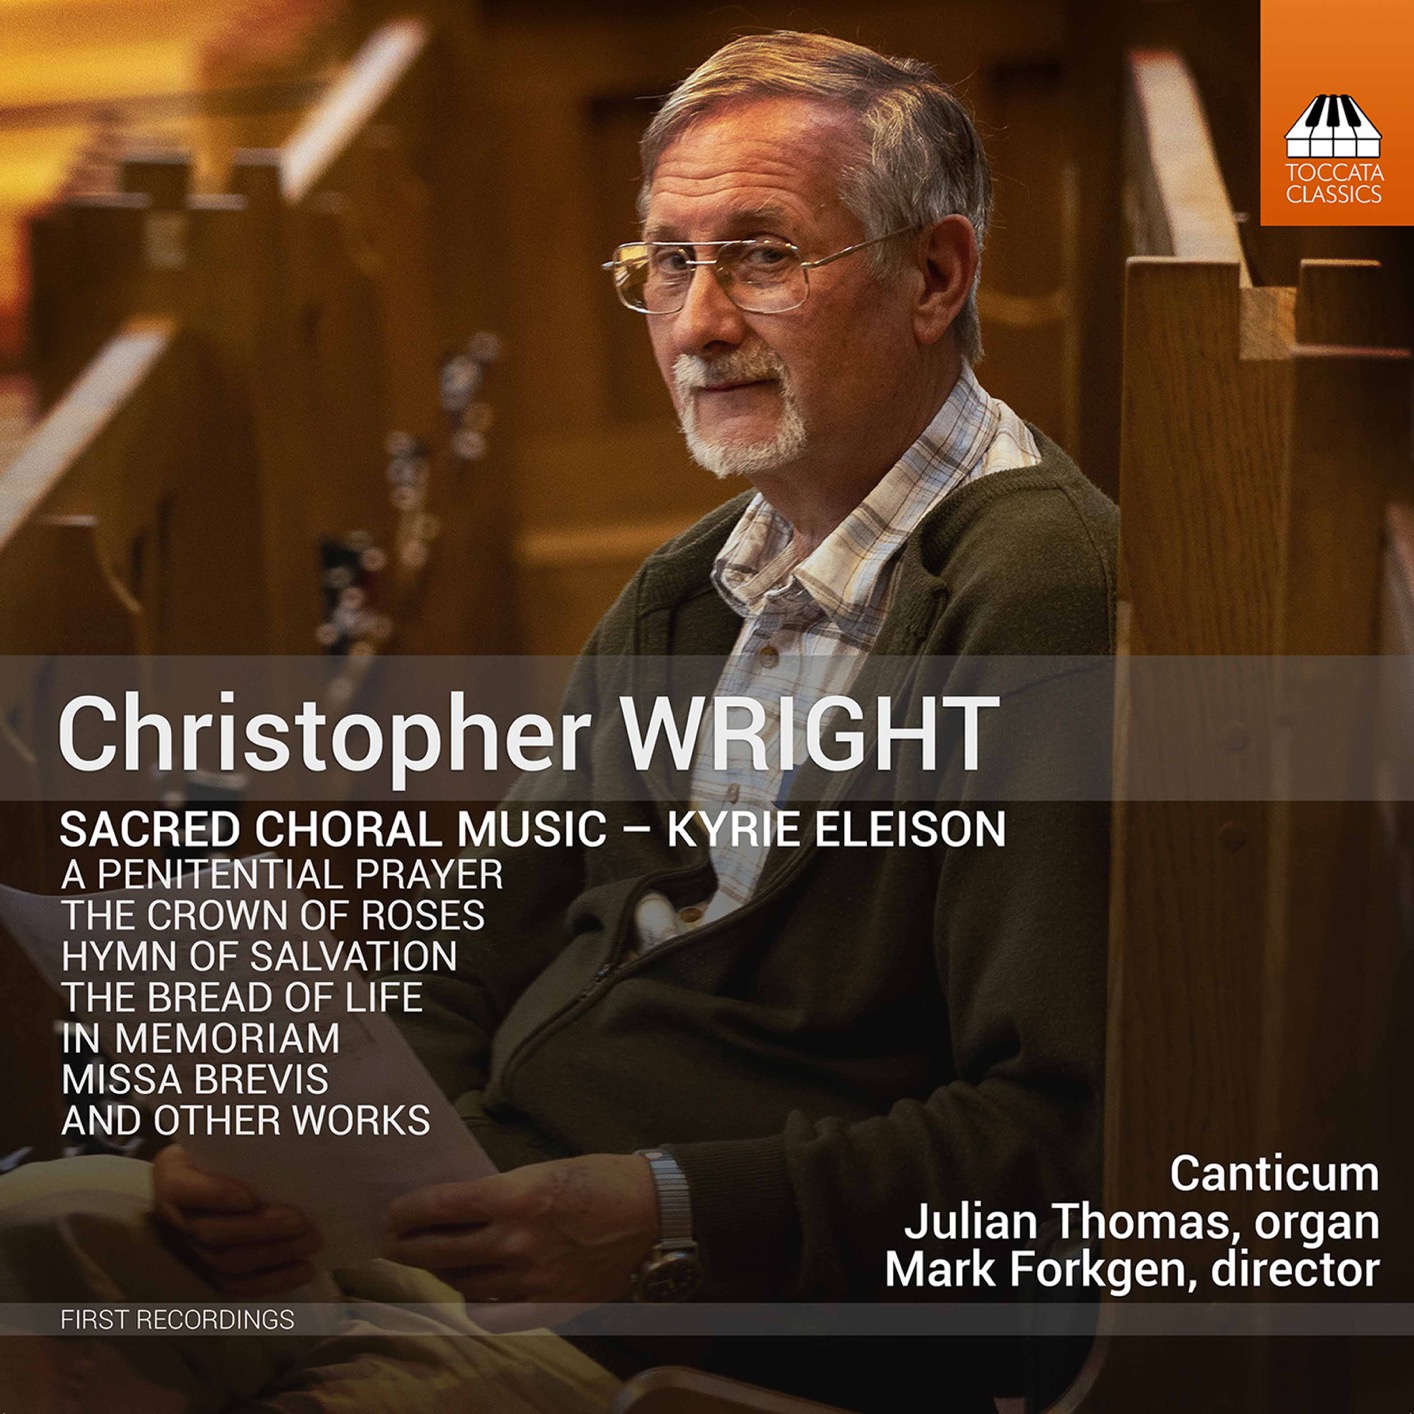 Canticum, Julian Thomas & Mark Forkgen – Christopher Wright – Sacred Choral Music (2020) [FLAC 24bit/96kHz]